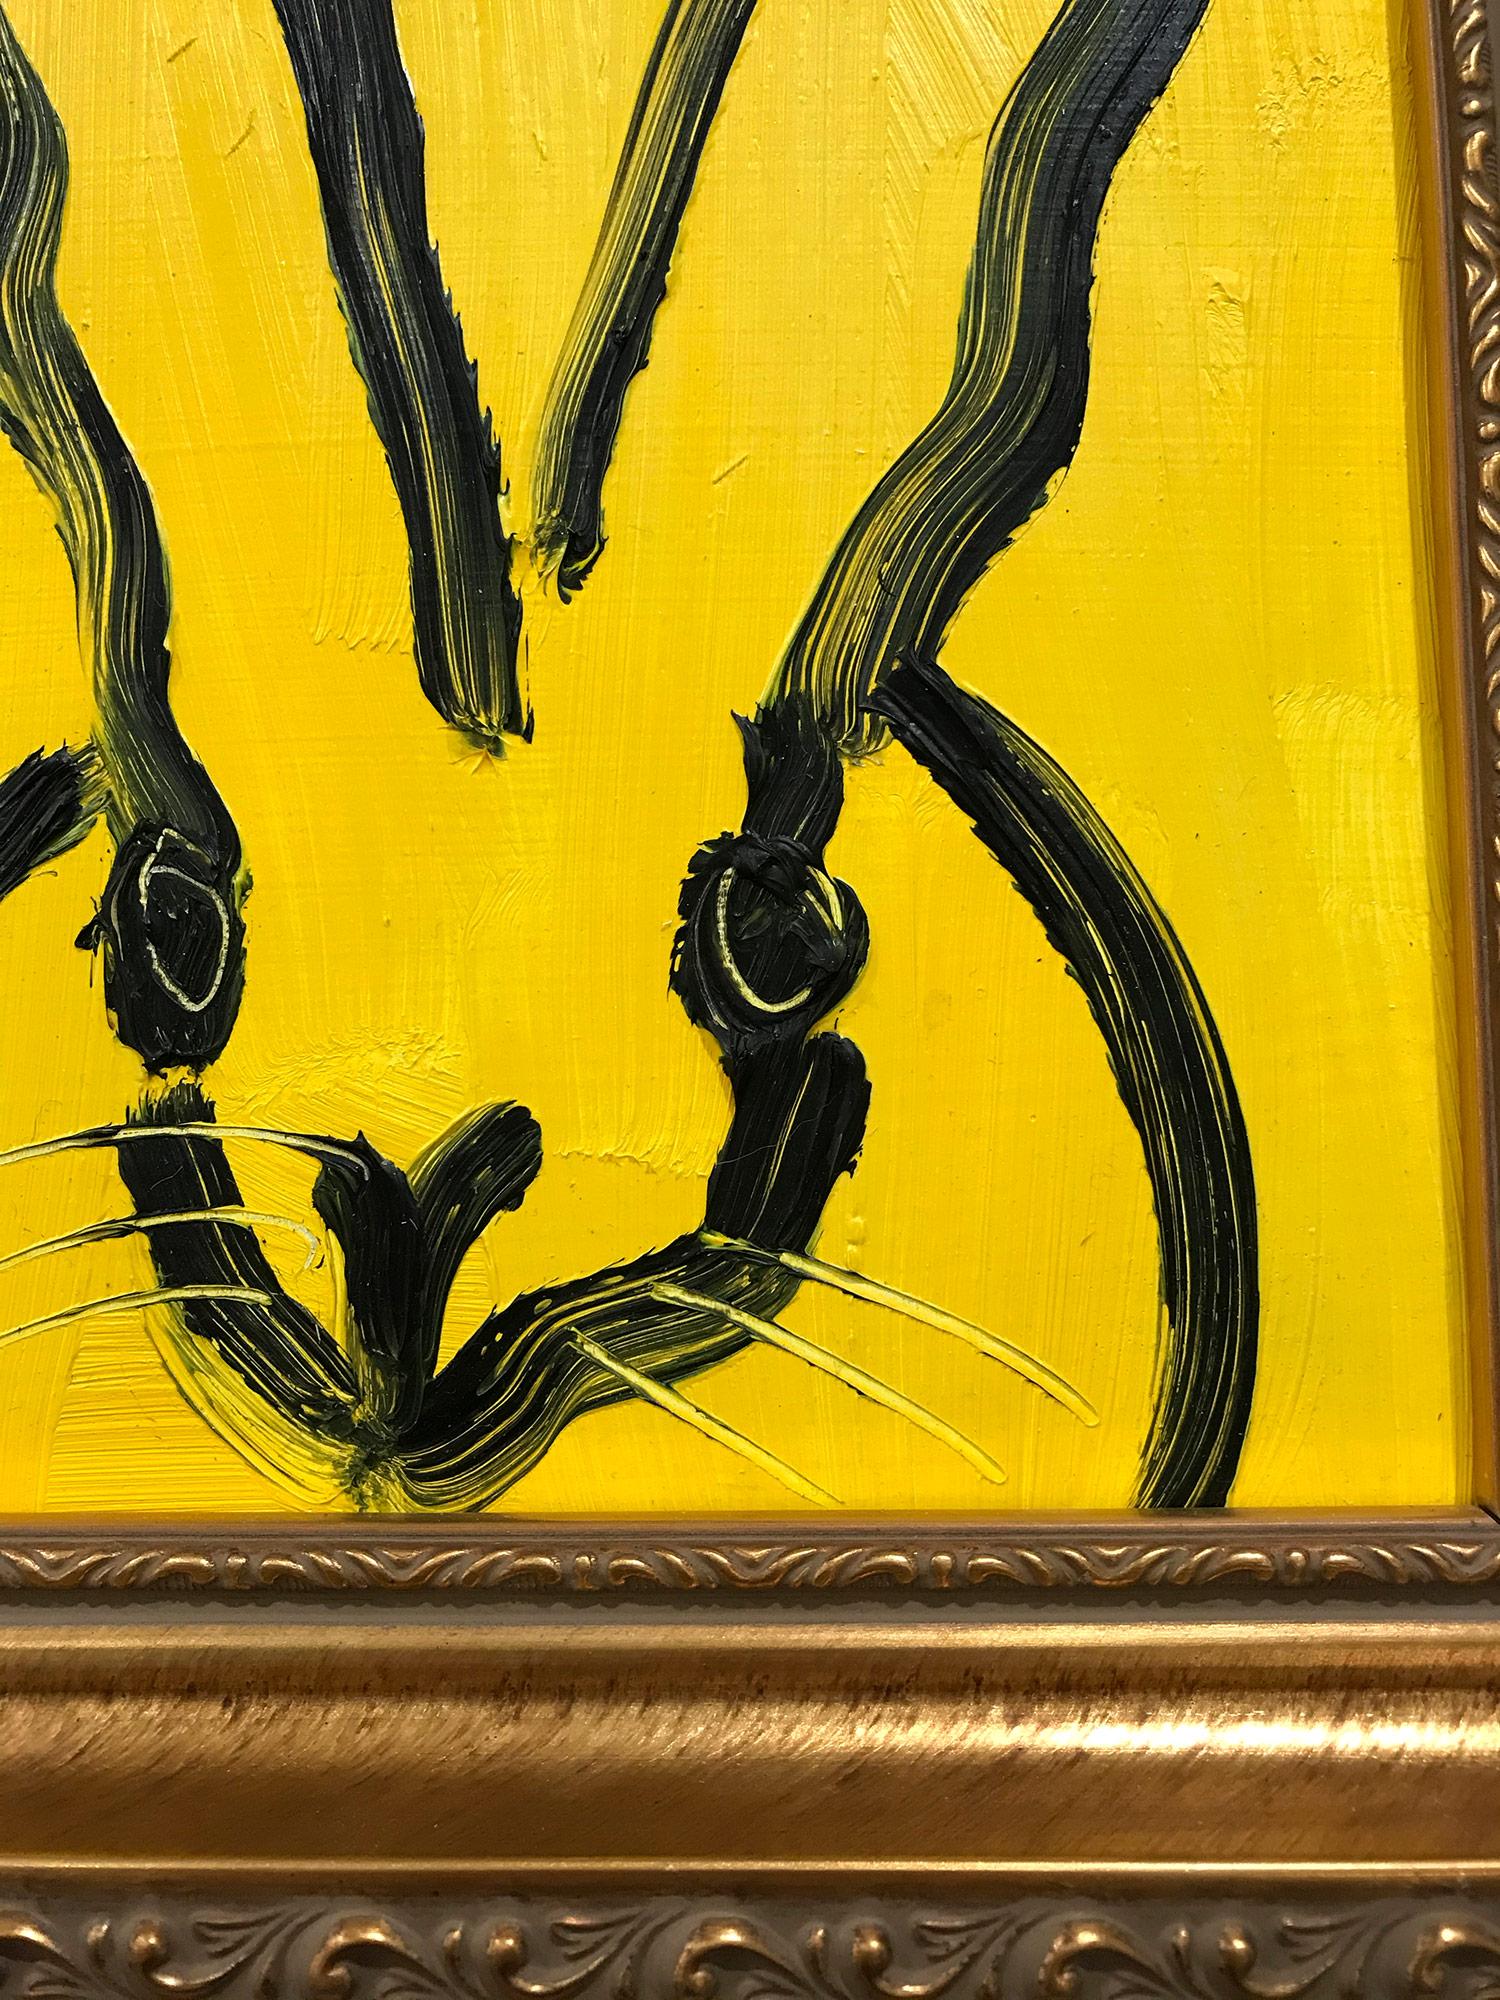 Jackie O - Yellow (Bunny on Royal Yellow) Oil Painting on Wood Panel 1